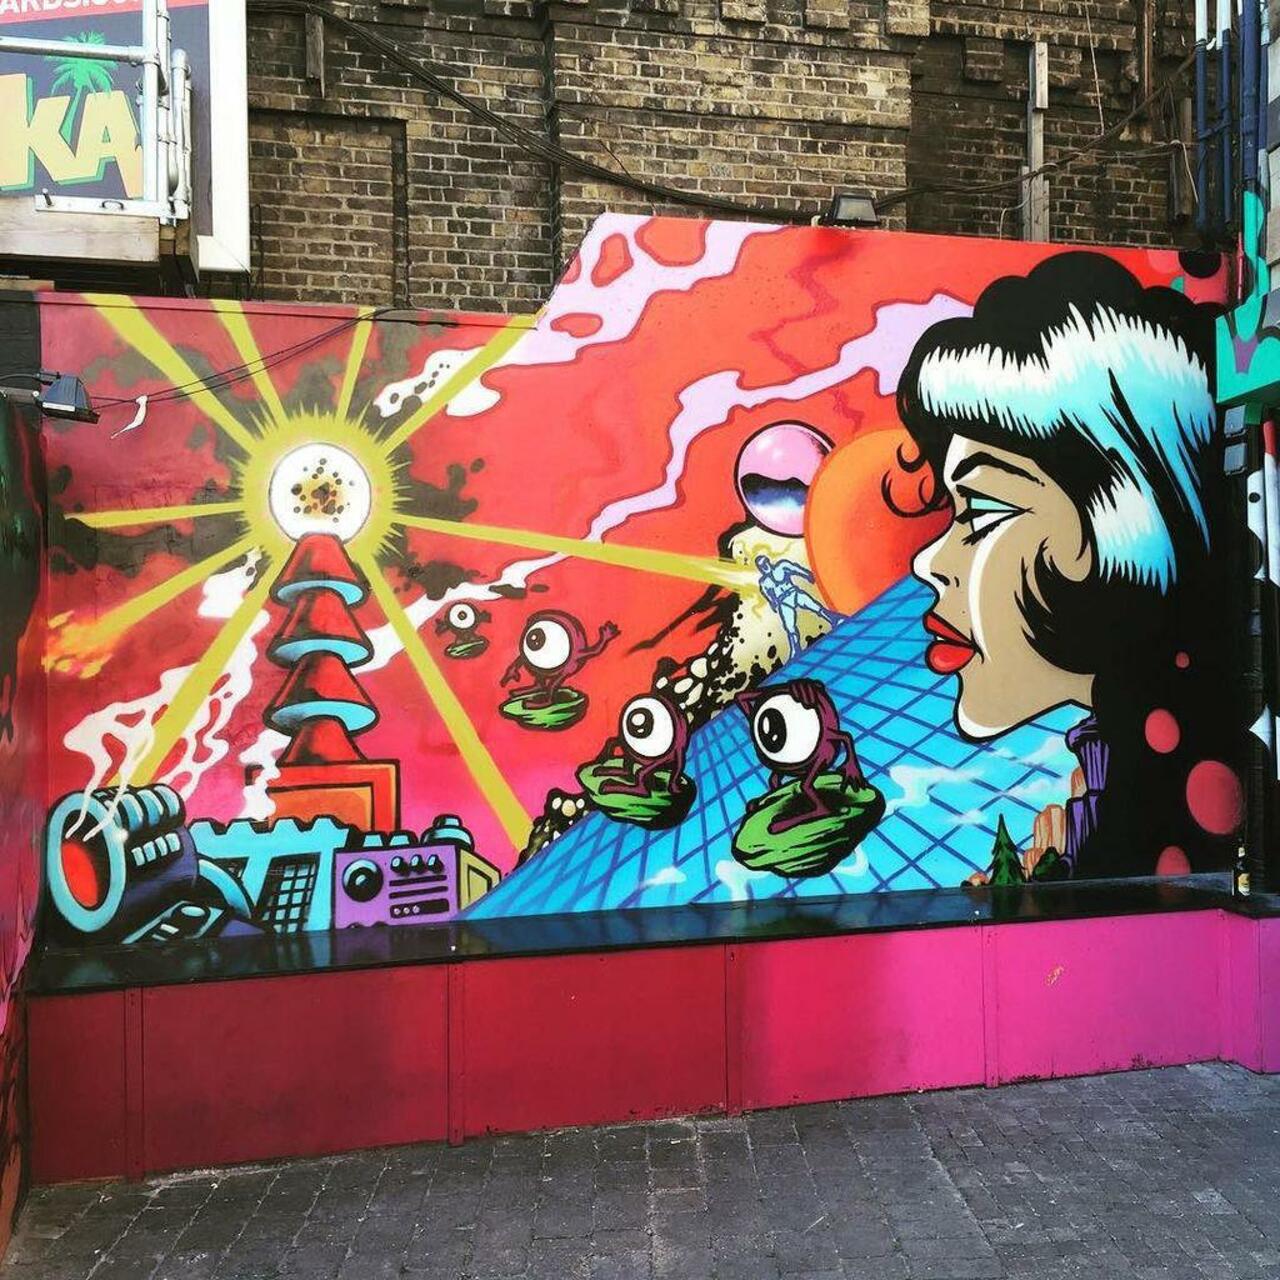 #London #brixton #brixtonvillage #londongrafiti #graffiti #StreetArt #streetartlondon #ldngraff #globalstreetart #u… http://t.co/jr3at6mRAy